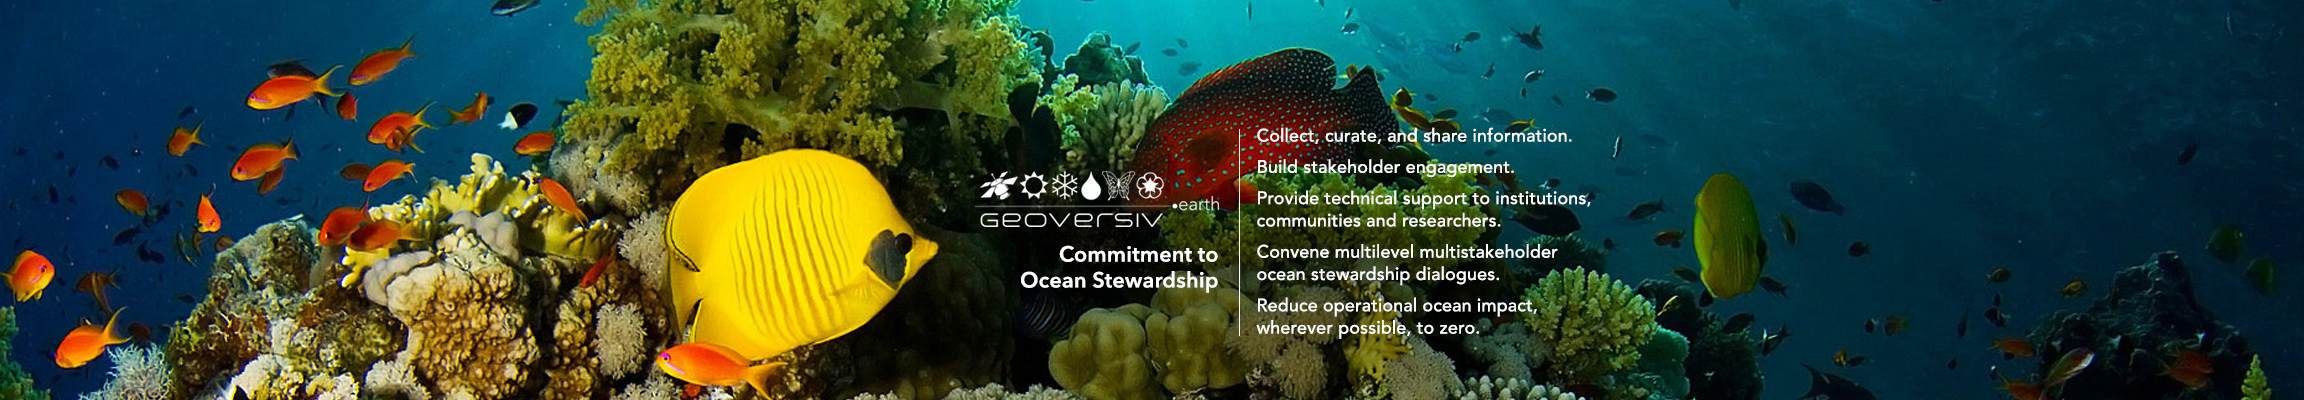 The Geoversiv Commitment to Ocean Stewardship: Living Future Strategies for Ocean Neutrality